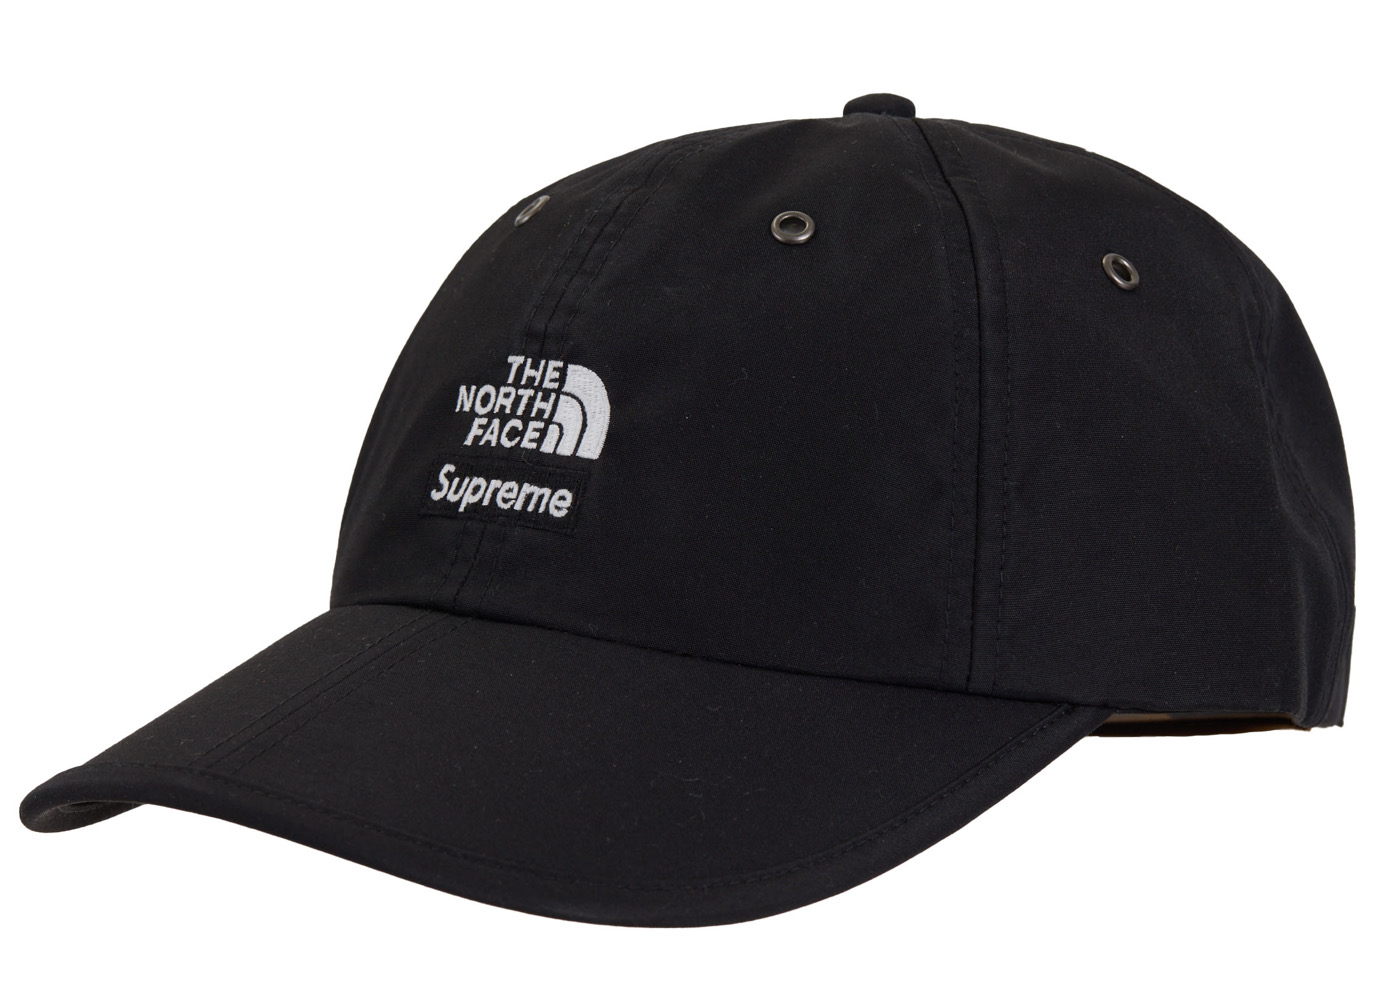 Supreme x The North Face Split 6-Panel帽子 - 帽子